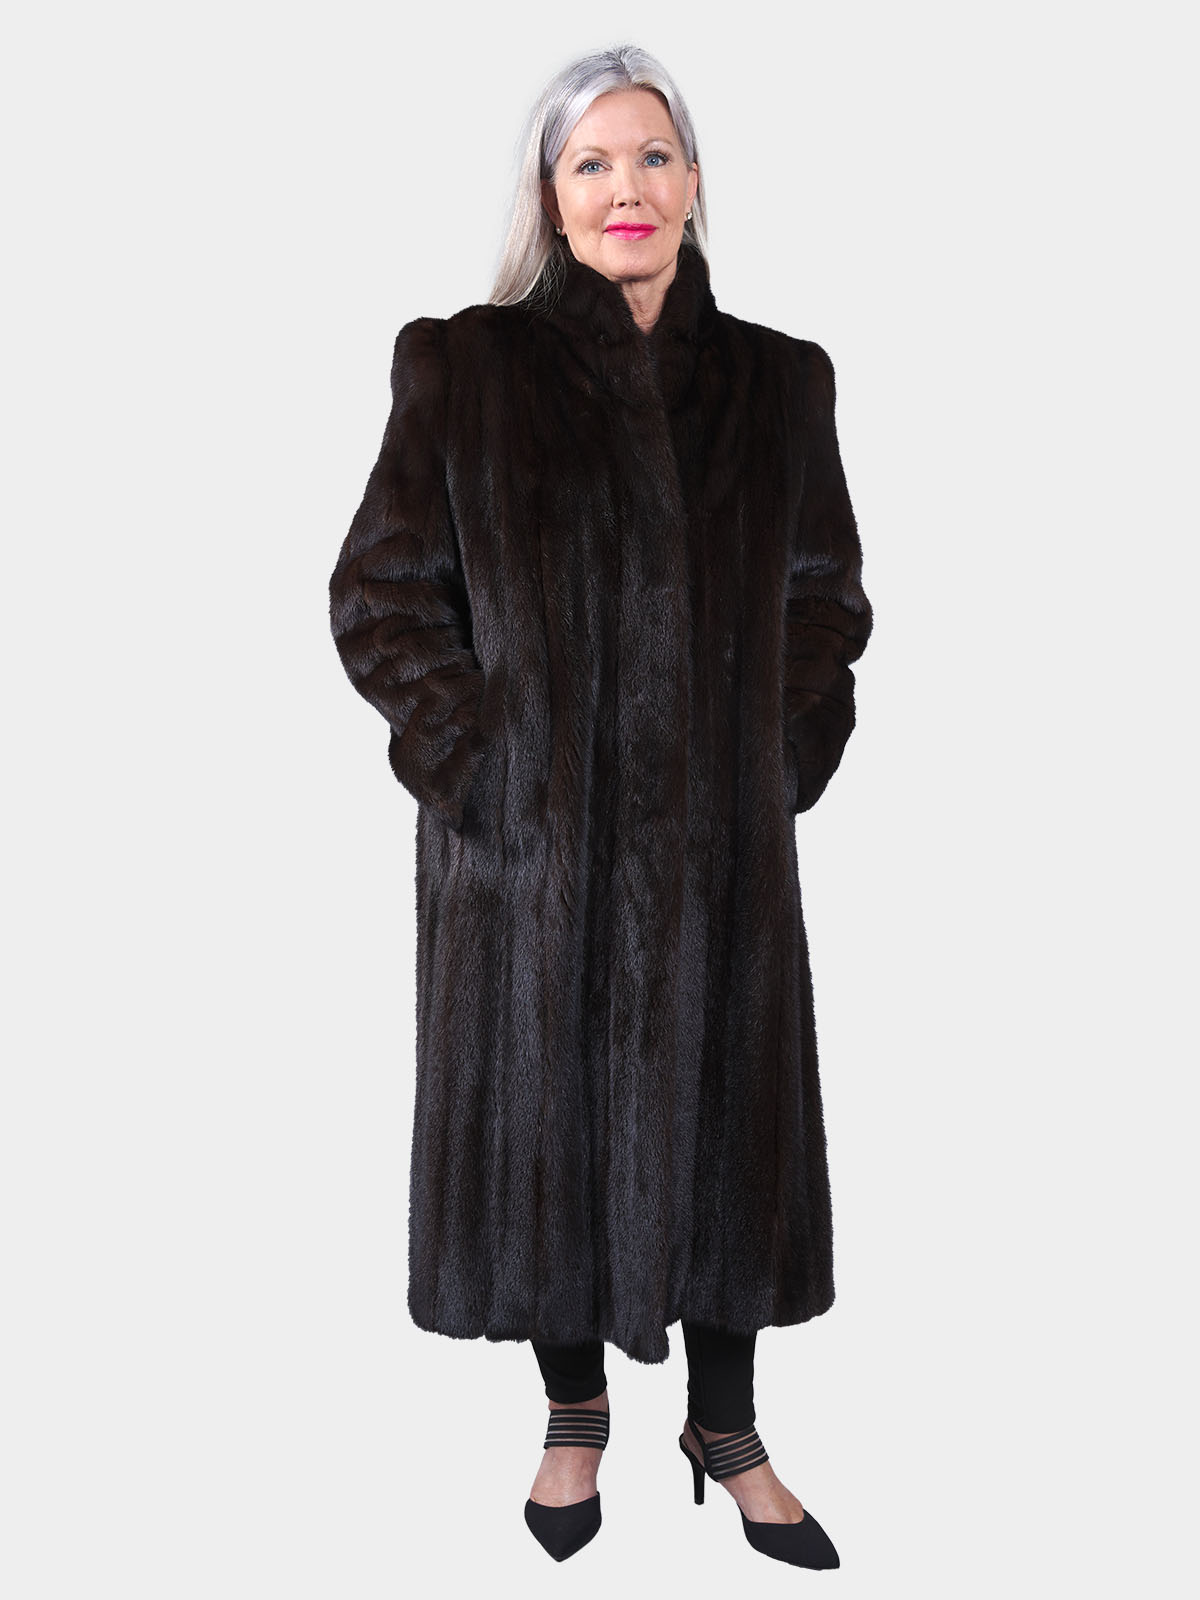 Ranch Mink Fur Coat (Women's Medium) | Estate Furs